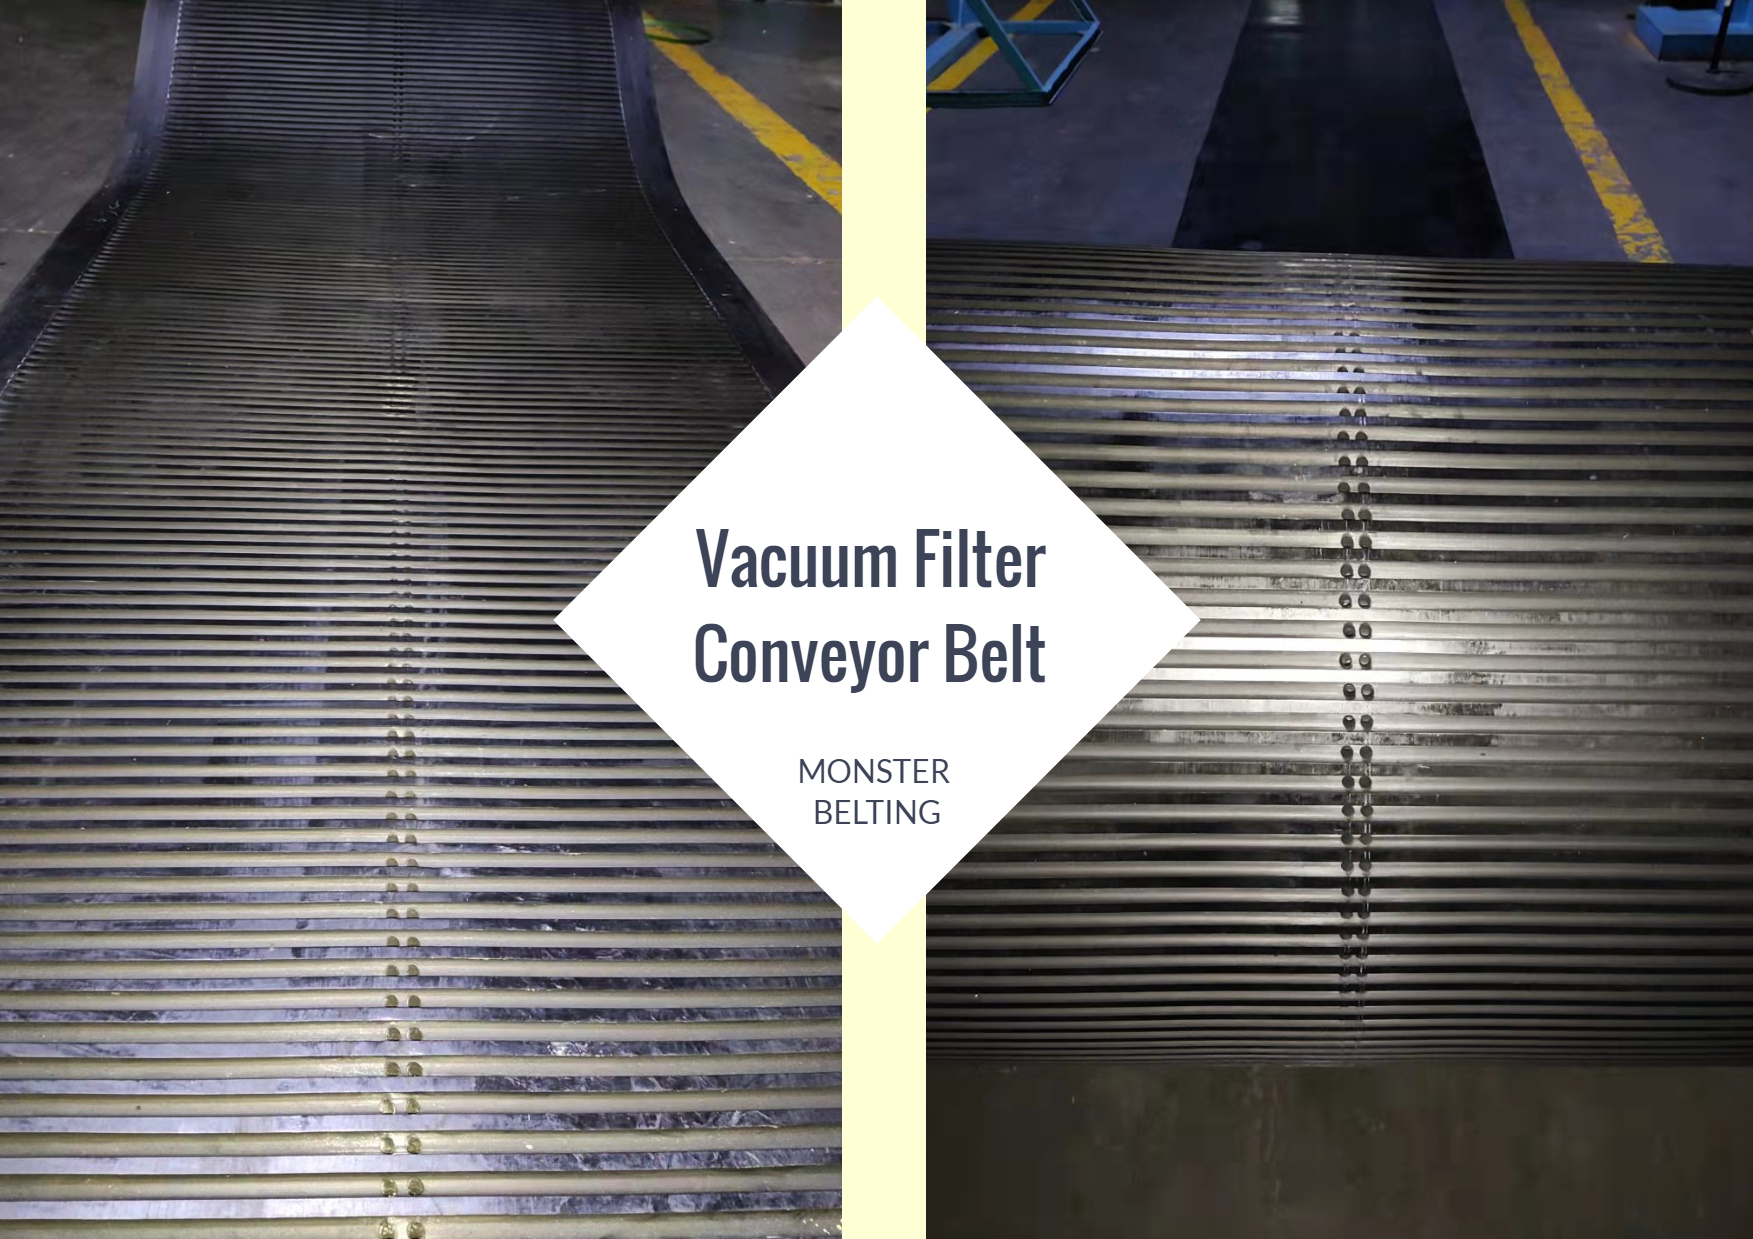 Vacuum Filter Conveyor Belt for Coal fired Power Plant